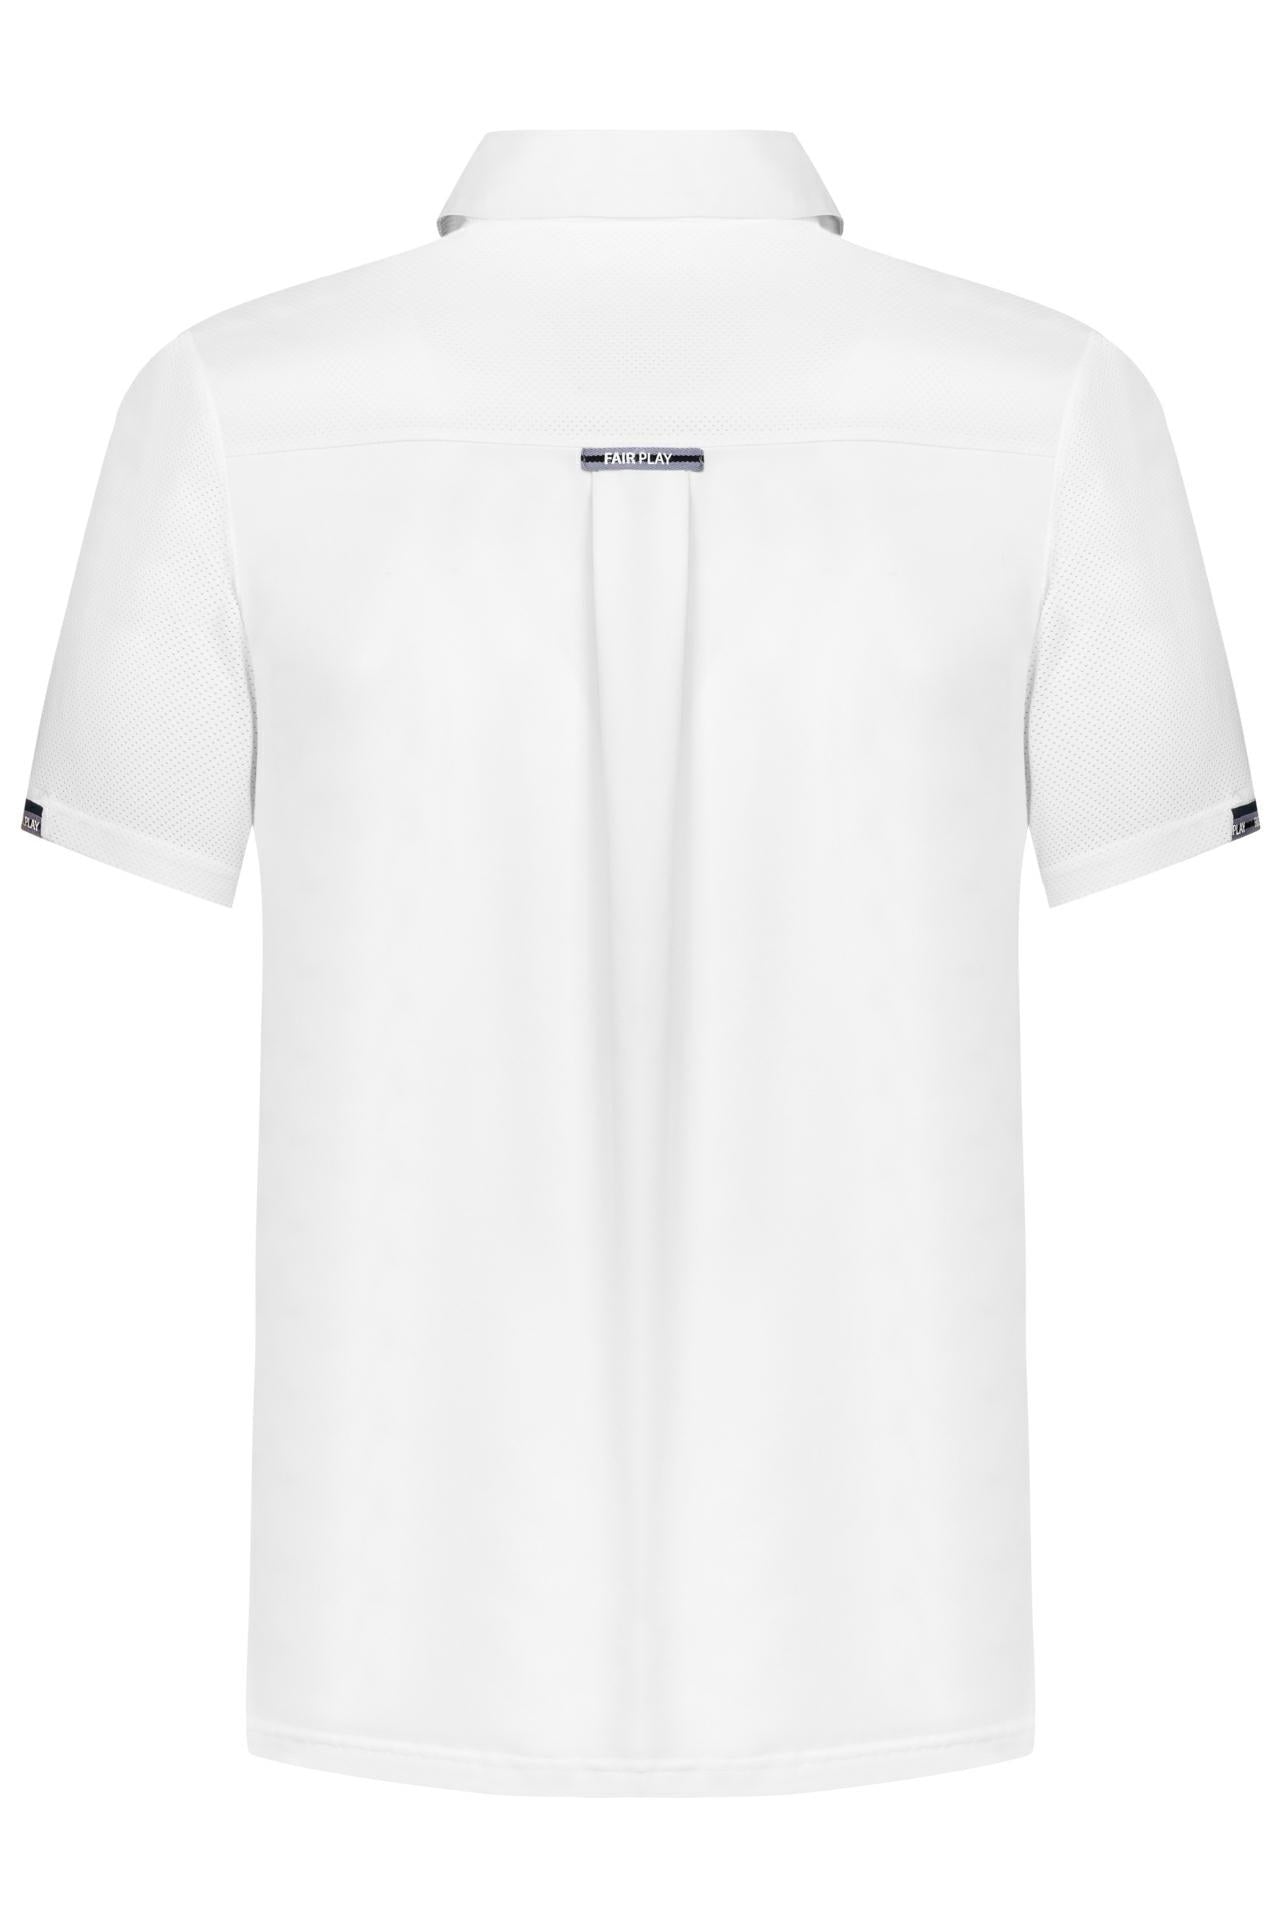 Fair Play Men's Competition Shirt White